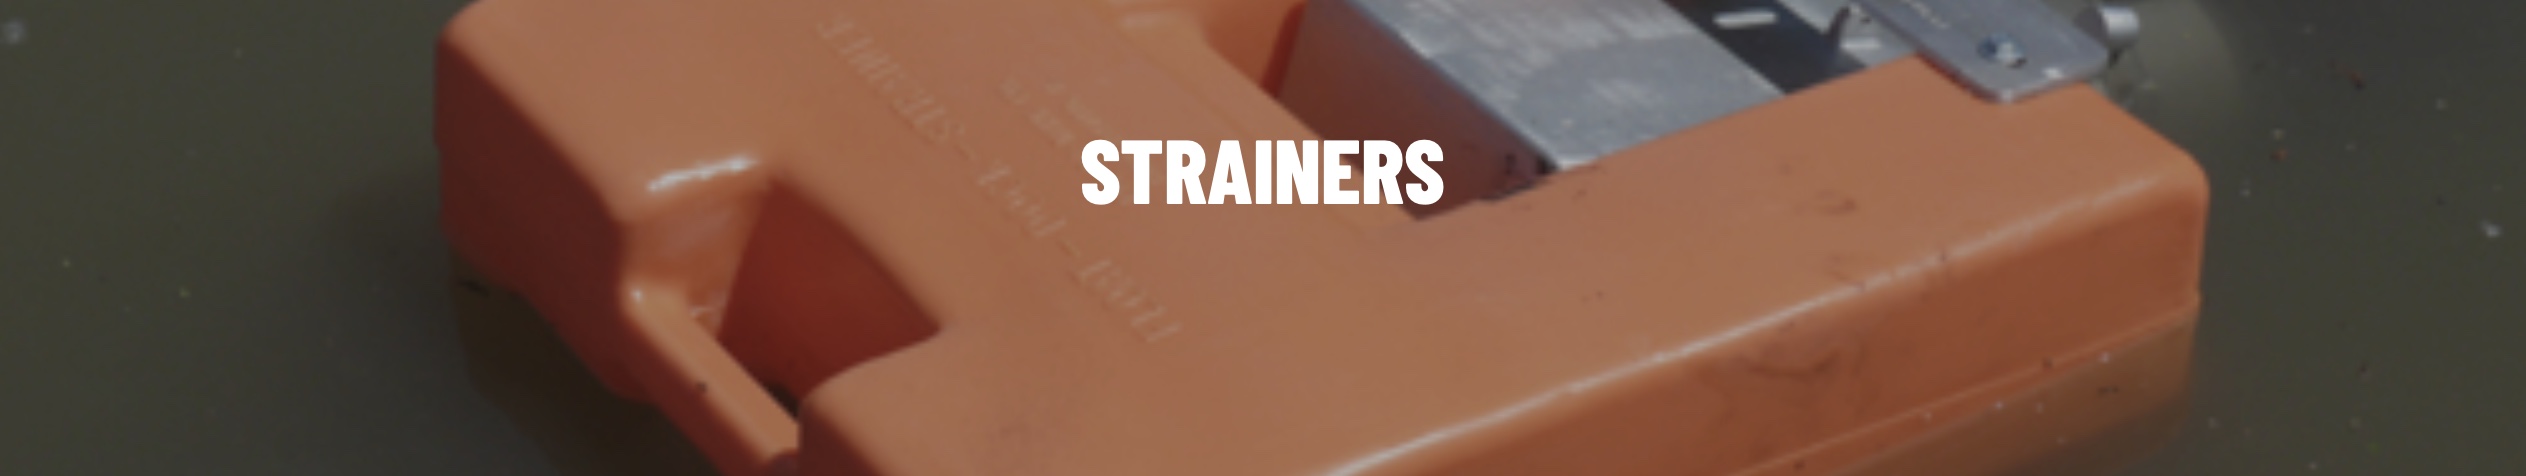 strainers.jpg